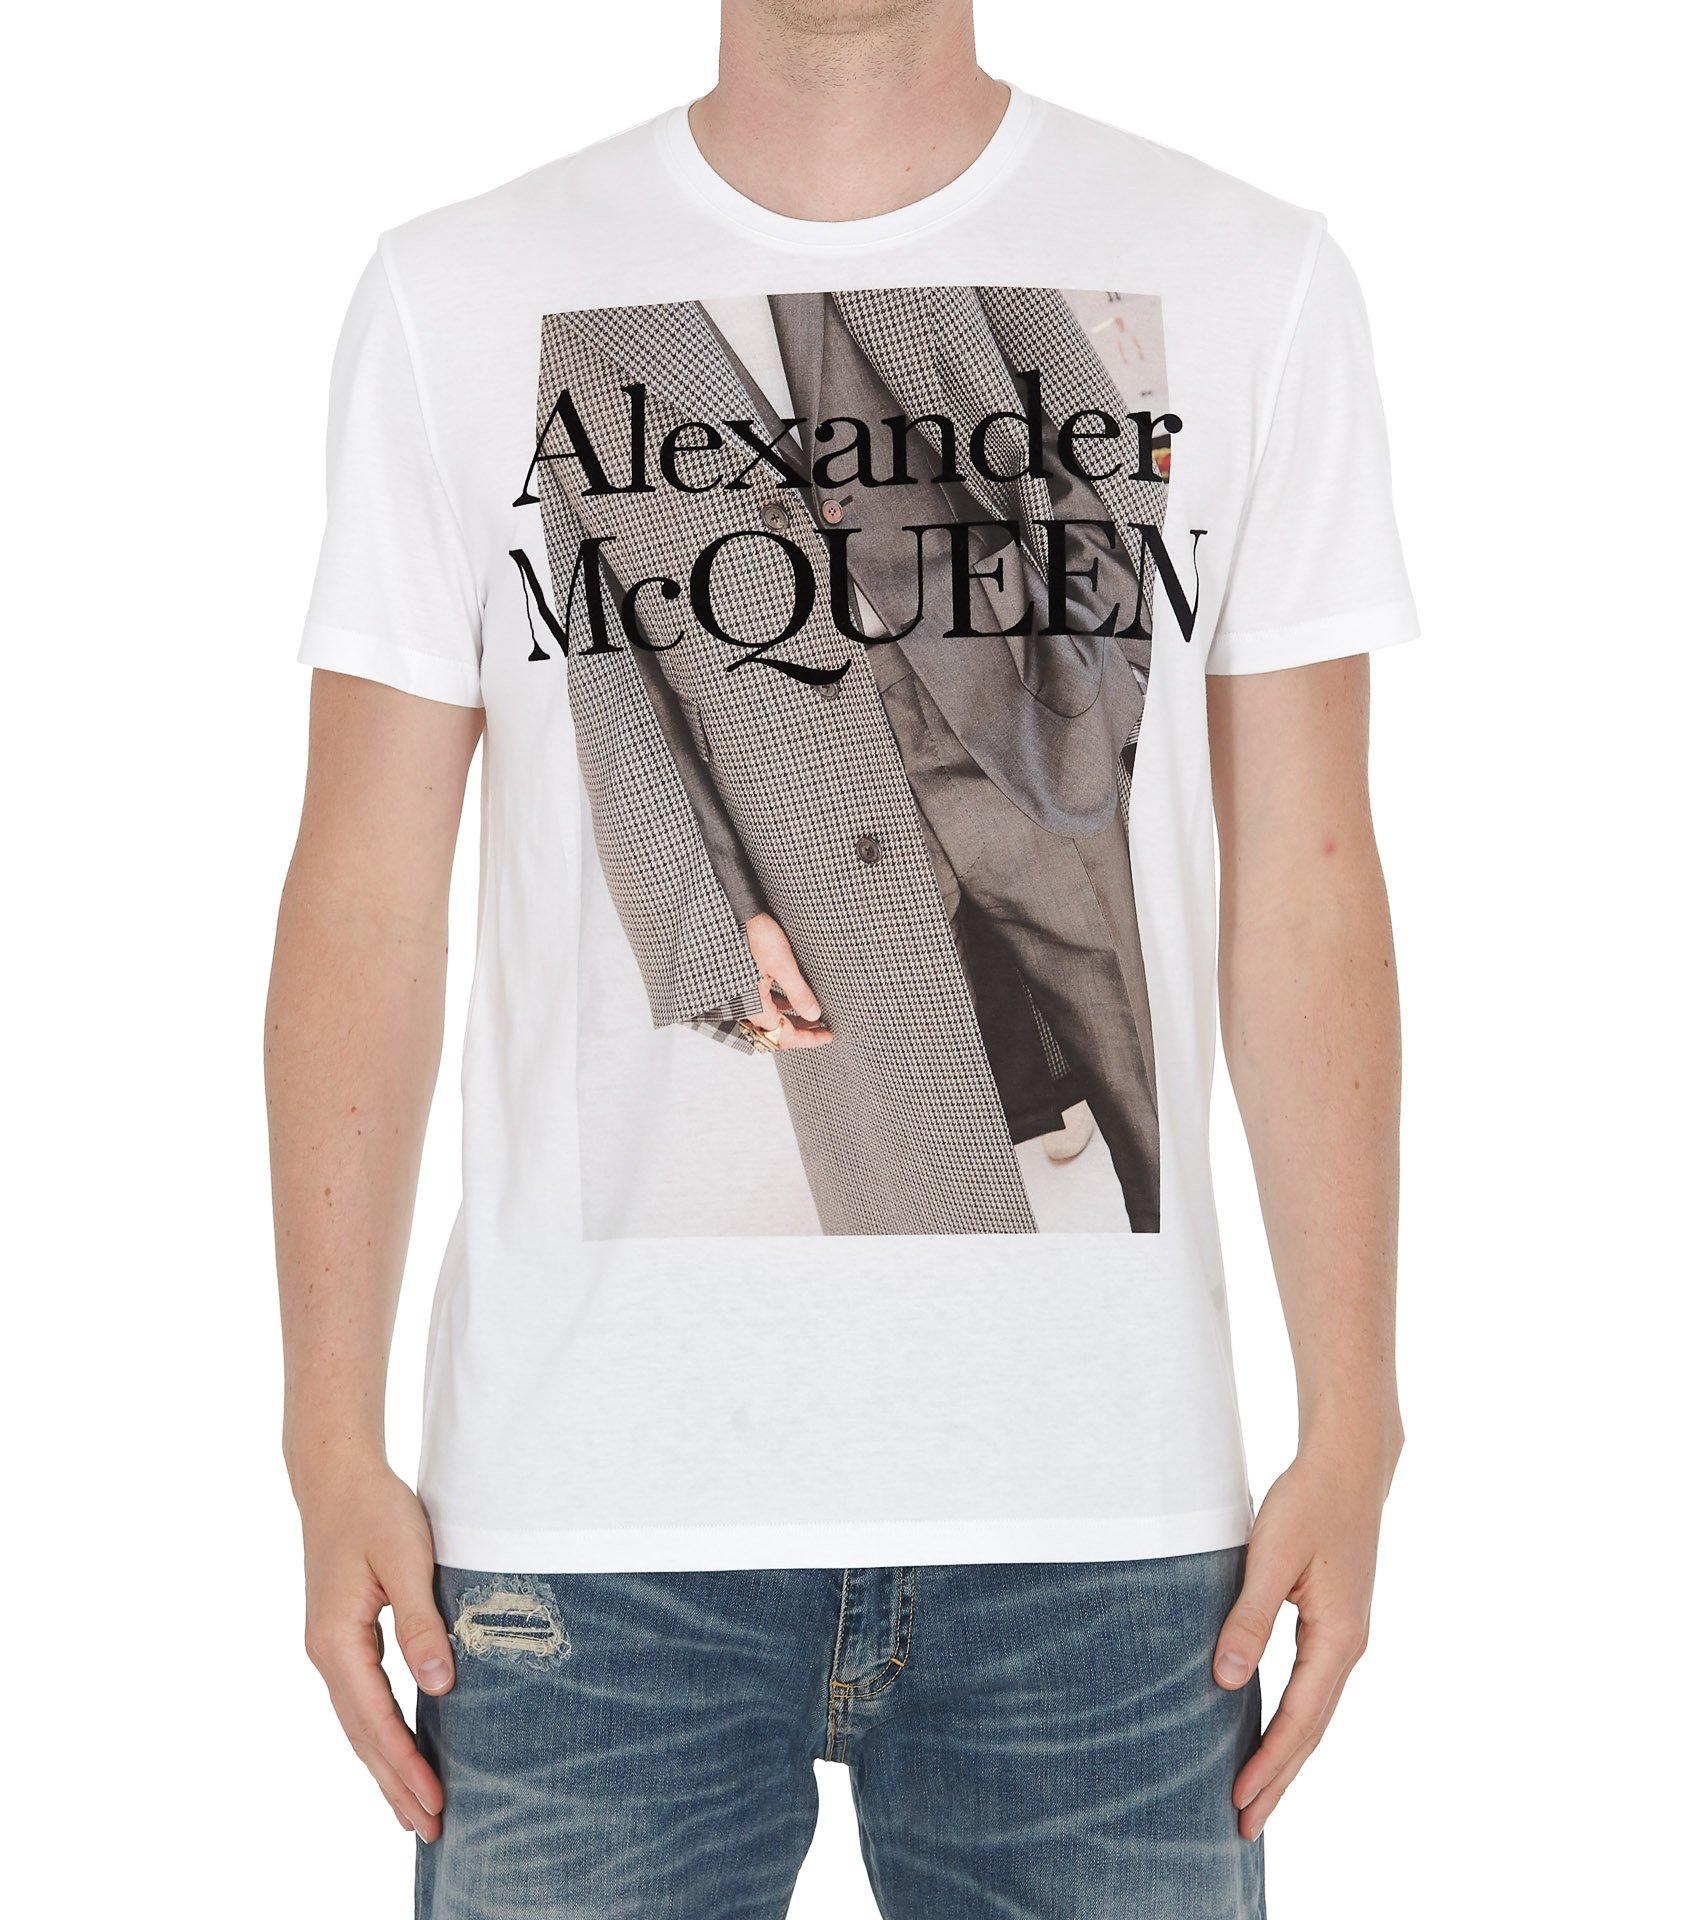 Alexander McQueen Cotton Crewneck T-shirt in White for Men - Lyst